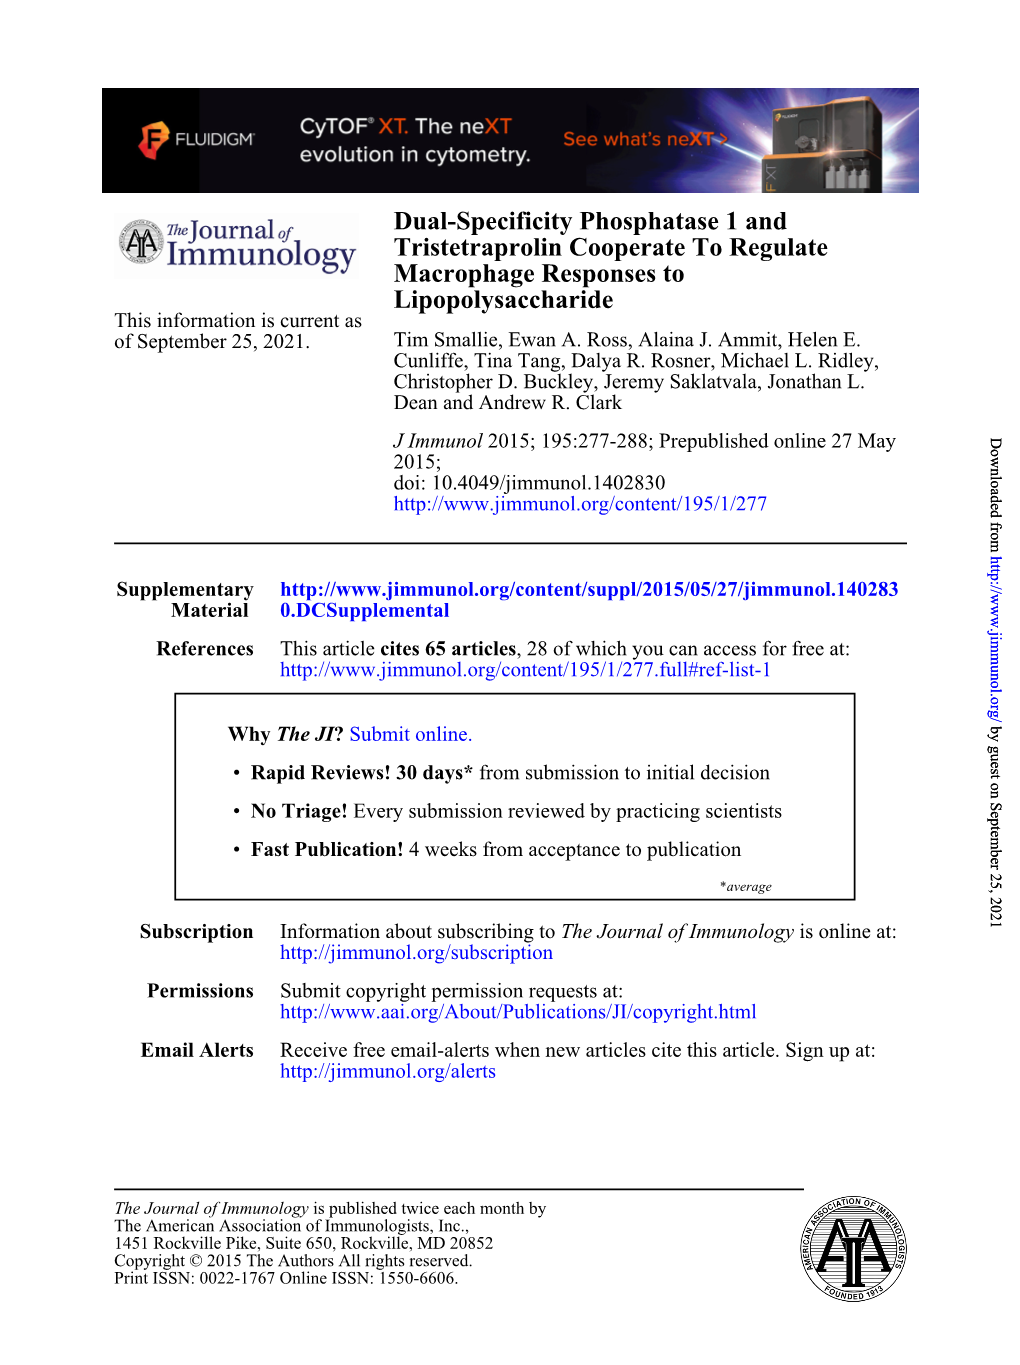 Lipopolysaccharide Macrophage Responses to Tristetraprolin